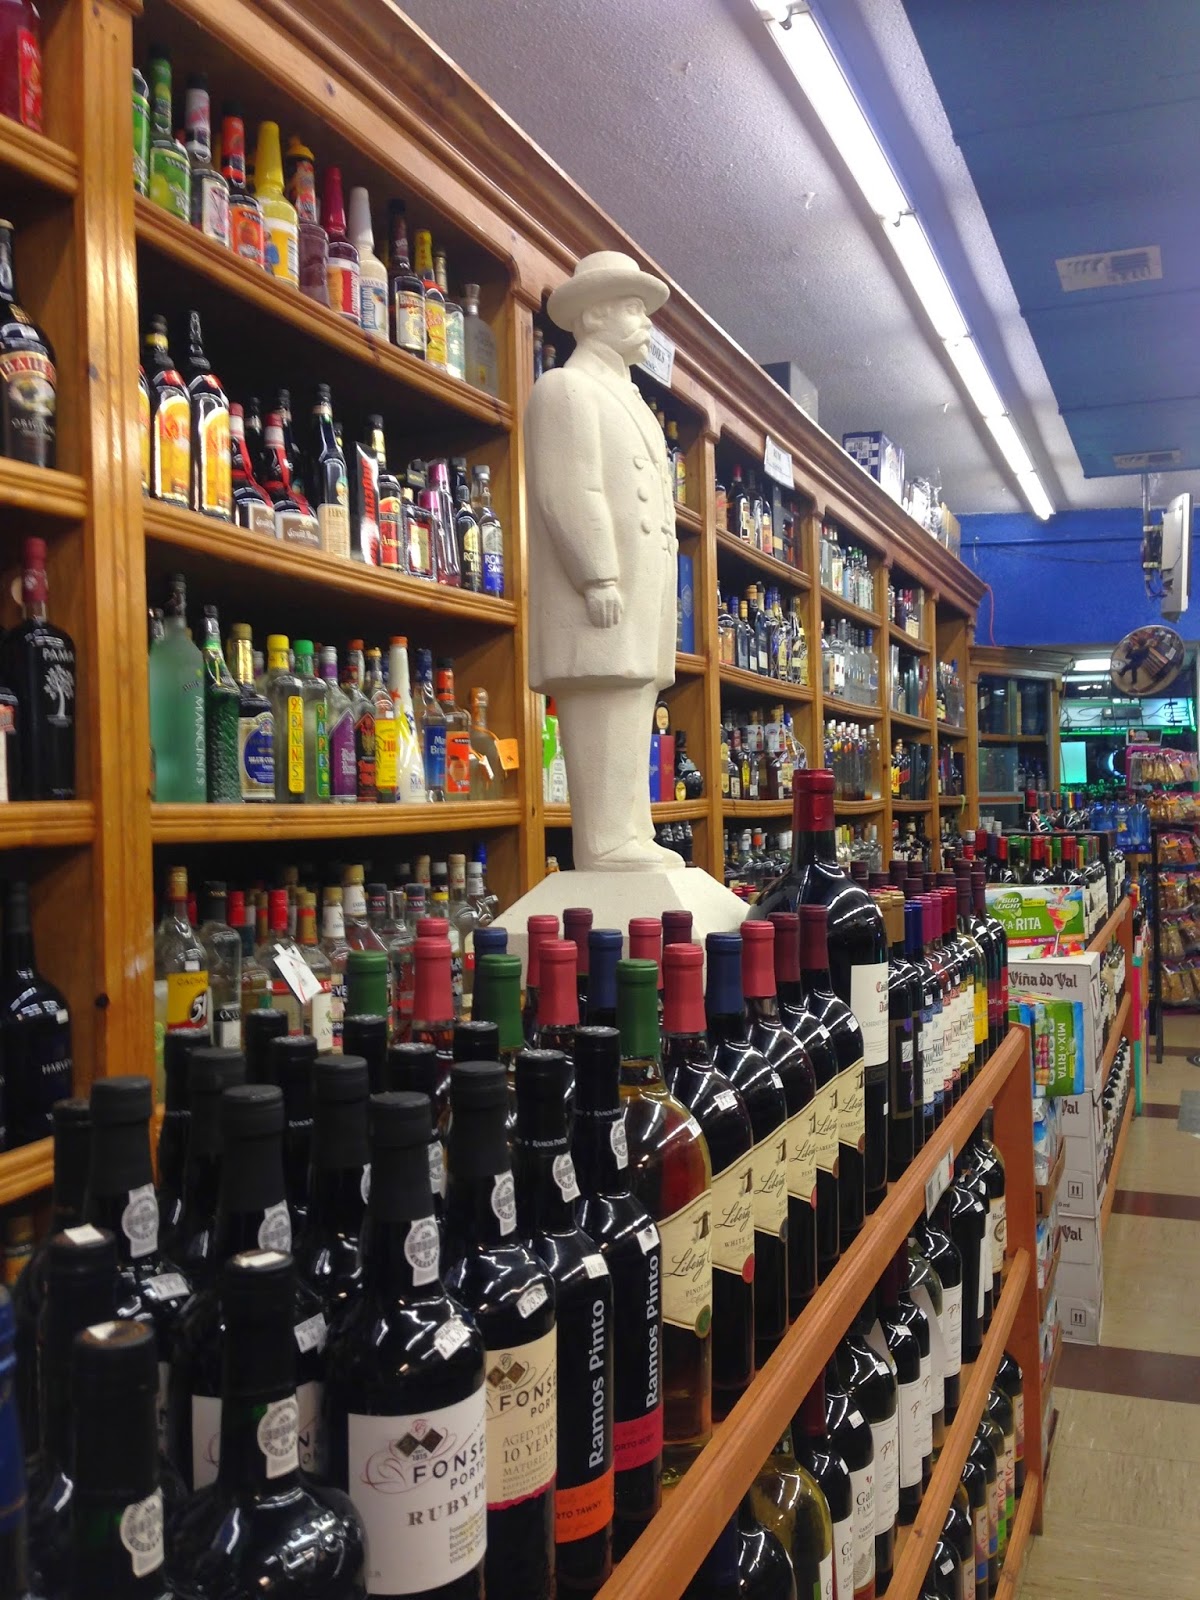 Photo of Corks & Bottles Liquor Deli in Guttenberg City, New Jersey, United States - 1 Picture of Food, Point of interest, Establishment, Finance, Store, Atm, Liquor store